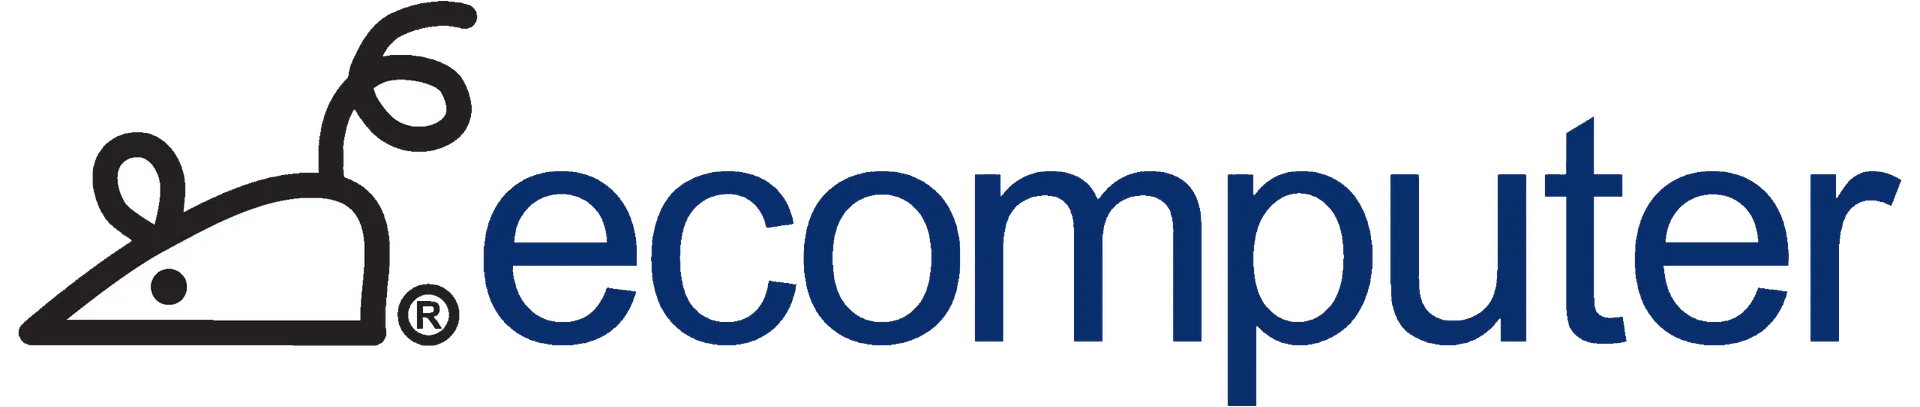 ECOMPUTER logo